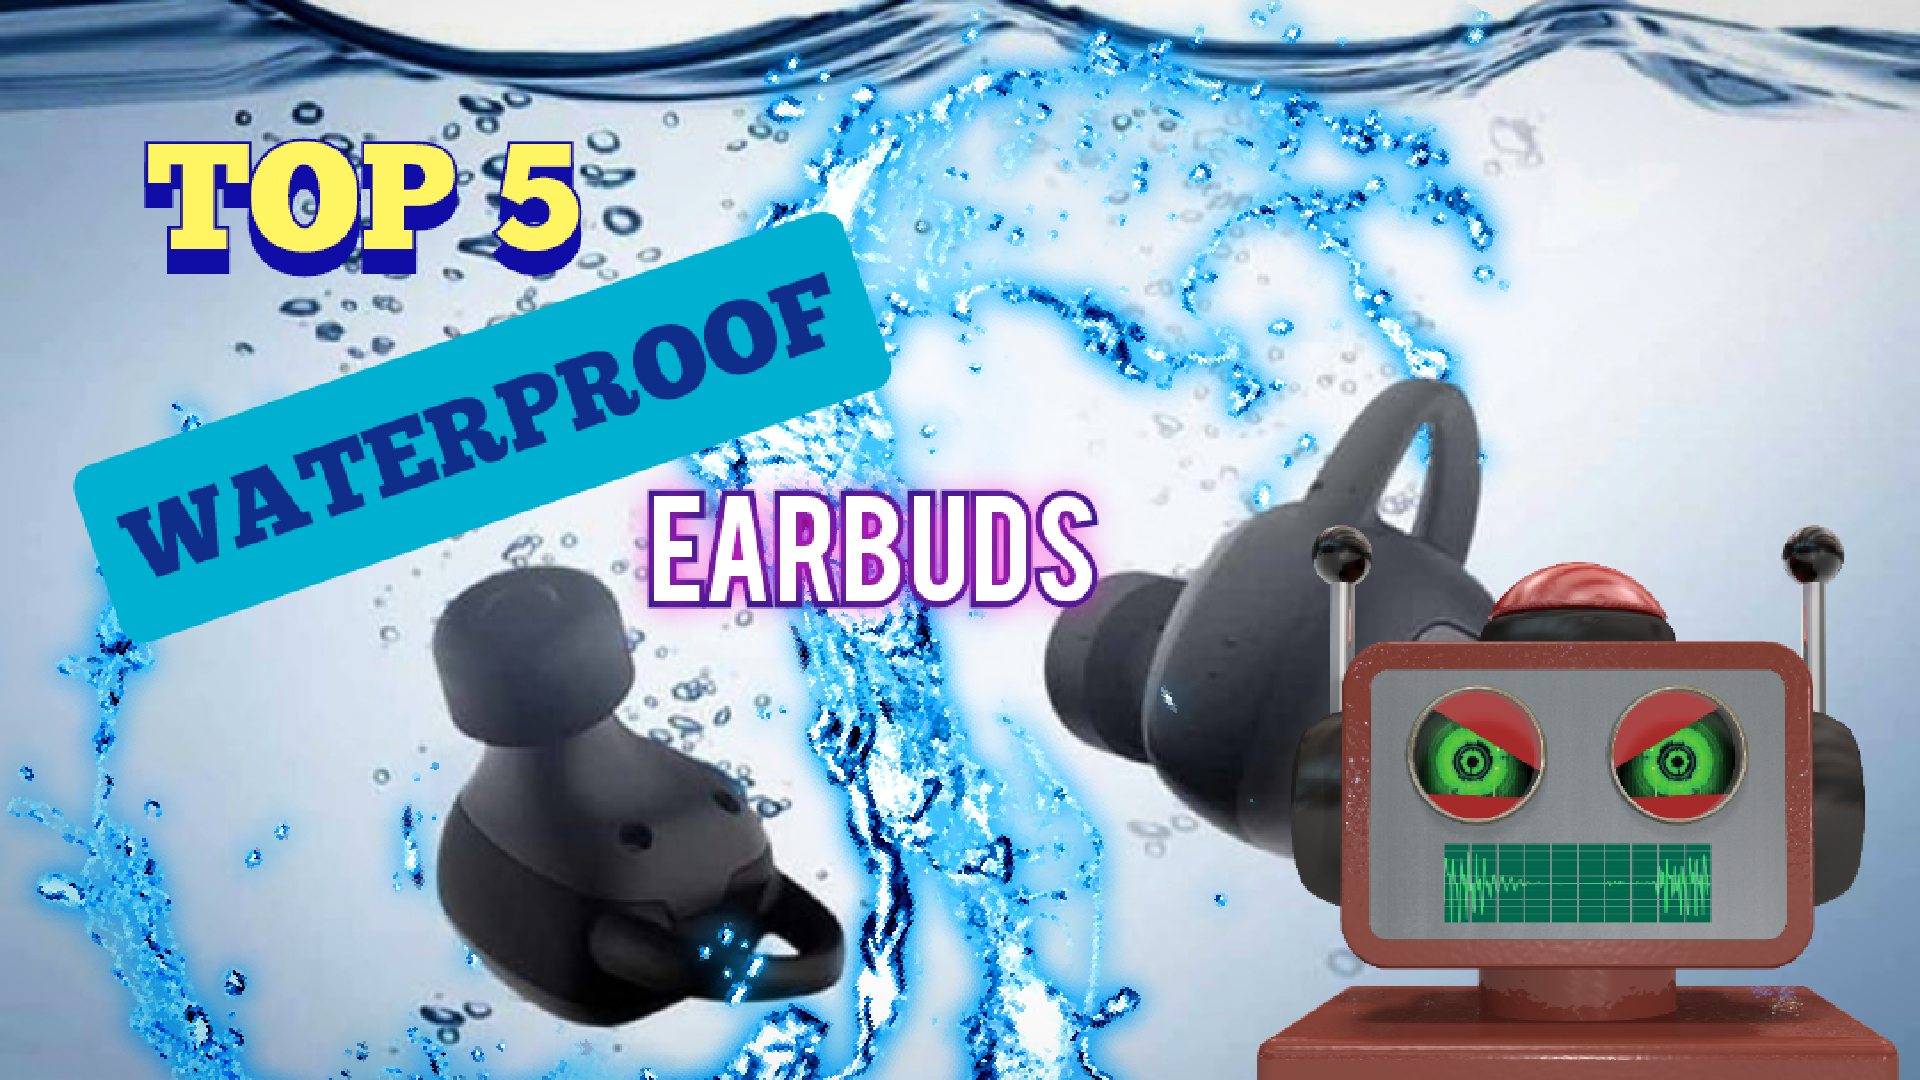 Waterproof and Durable Earbuds